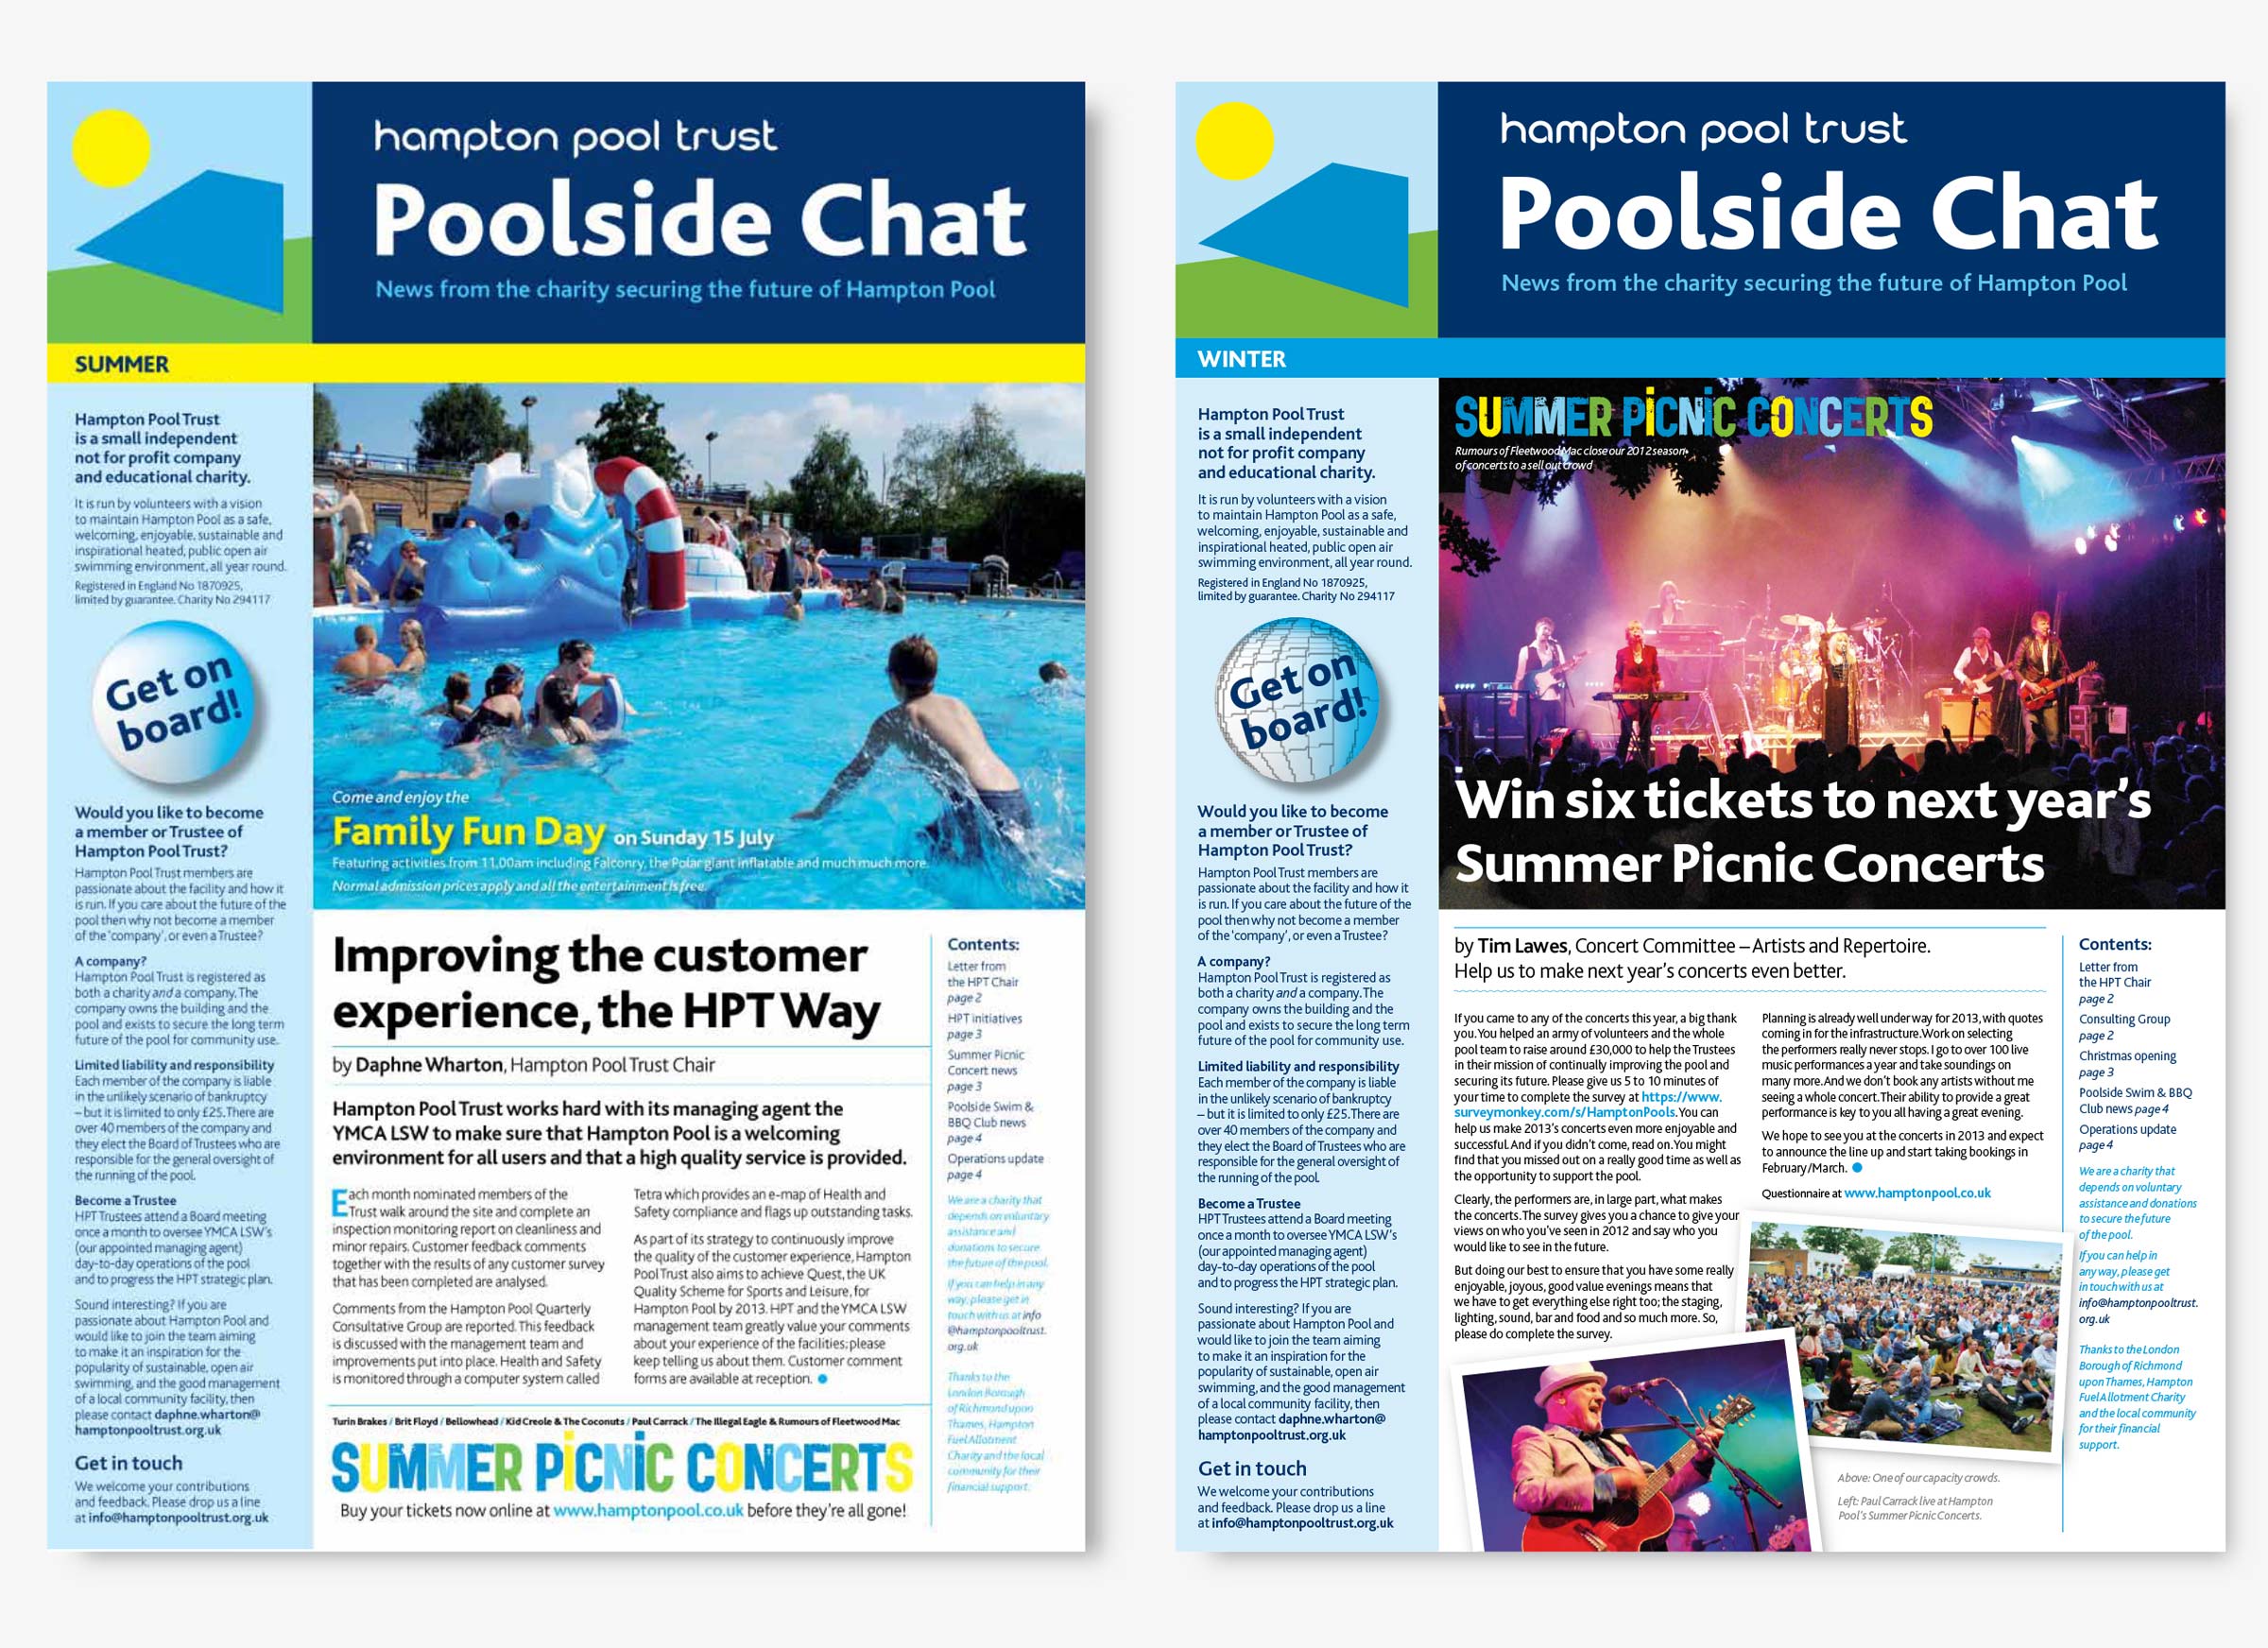 Hampton Pool Trust Poolside Chat newsletter